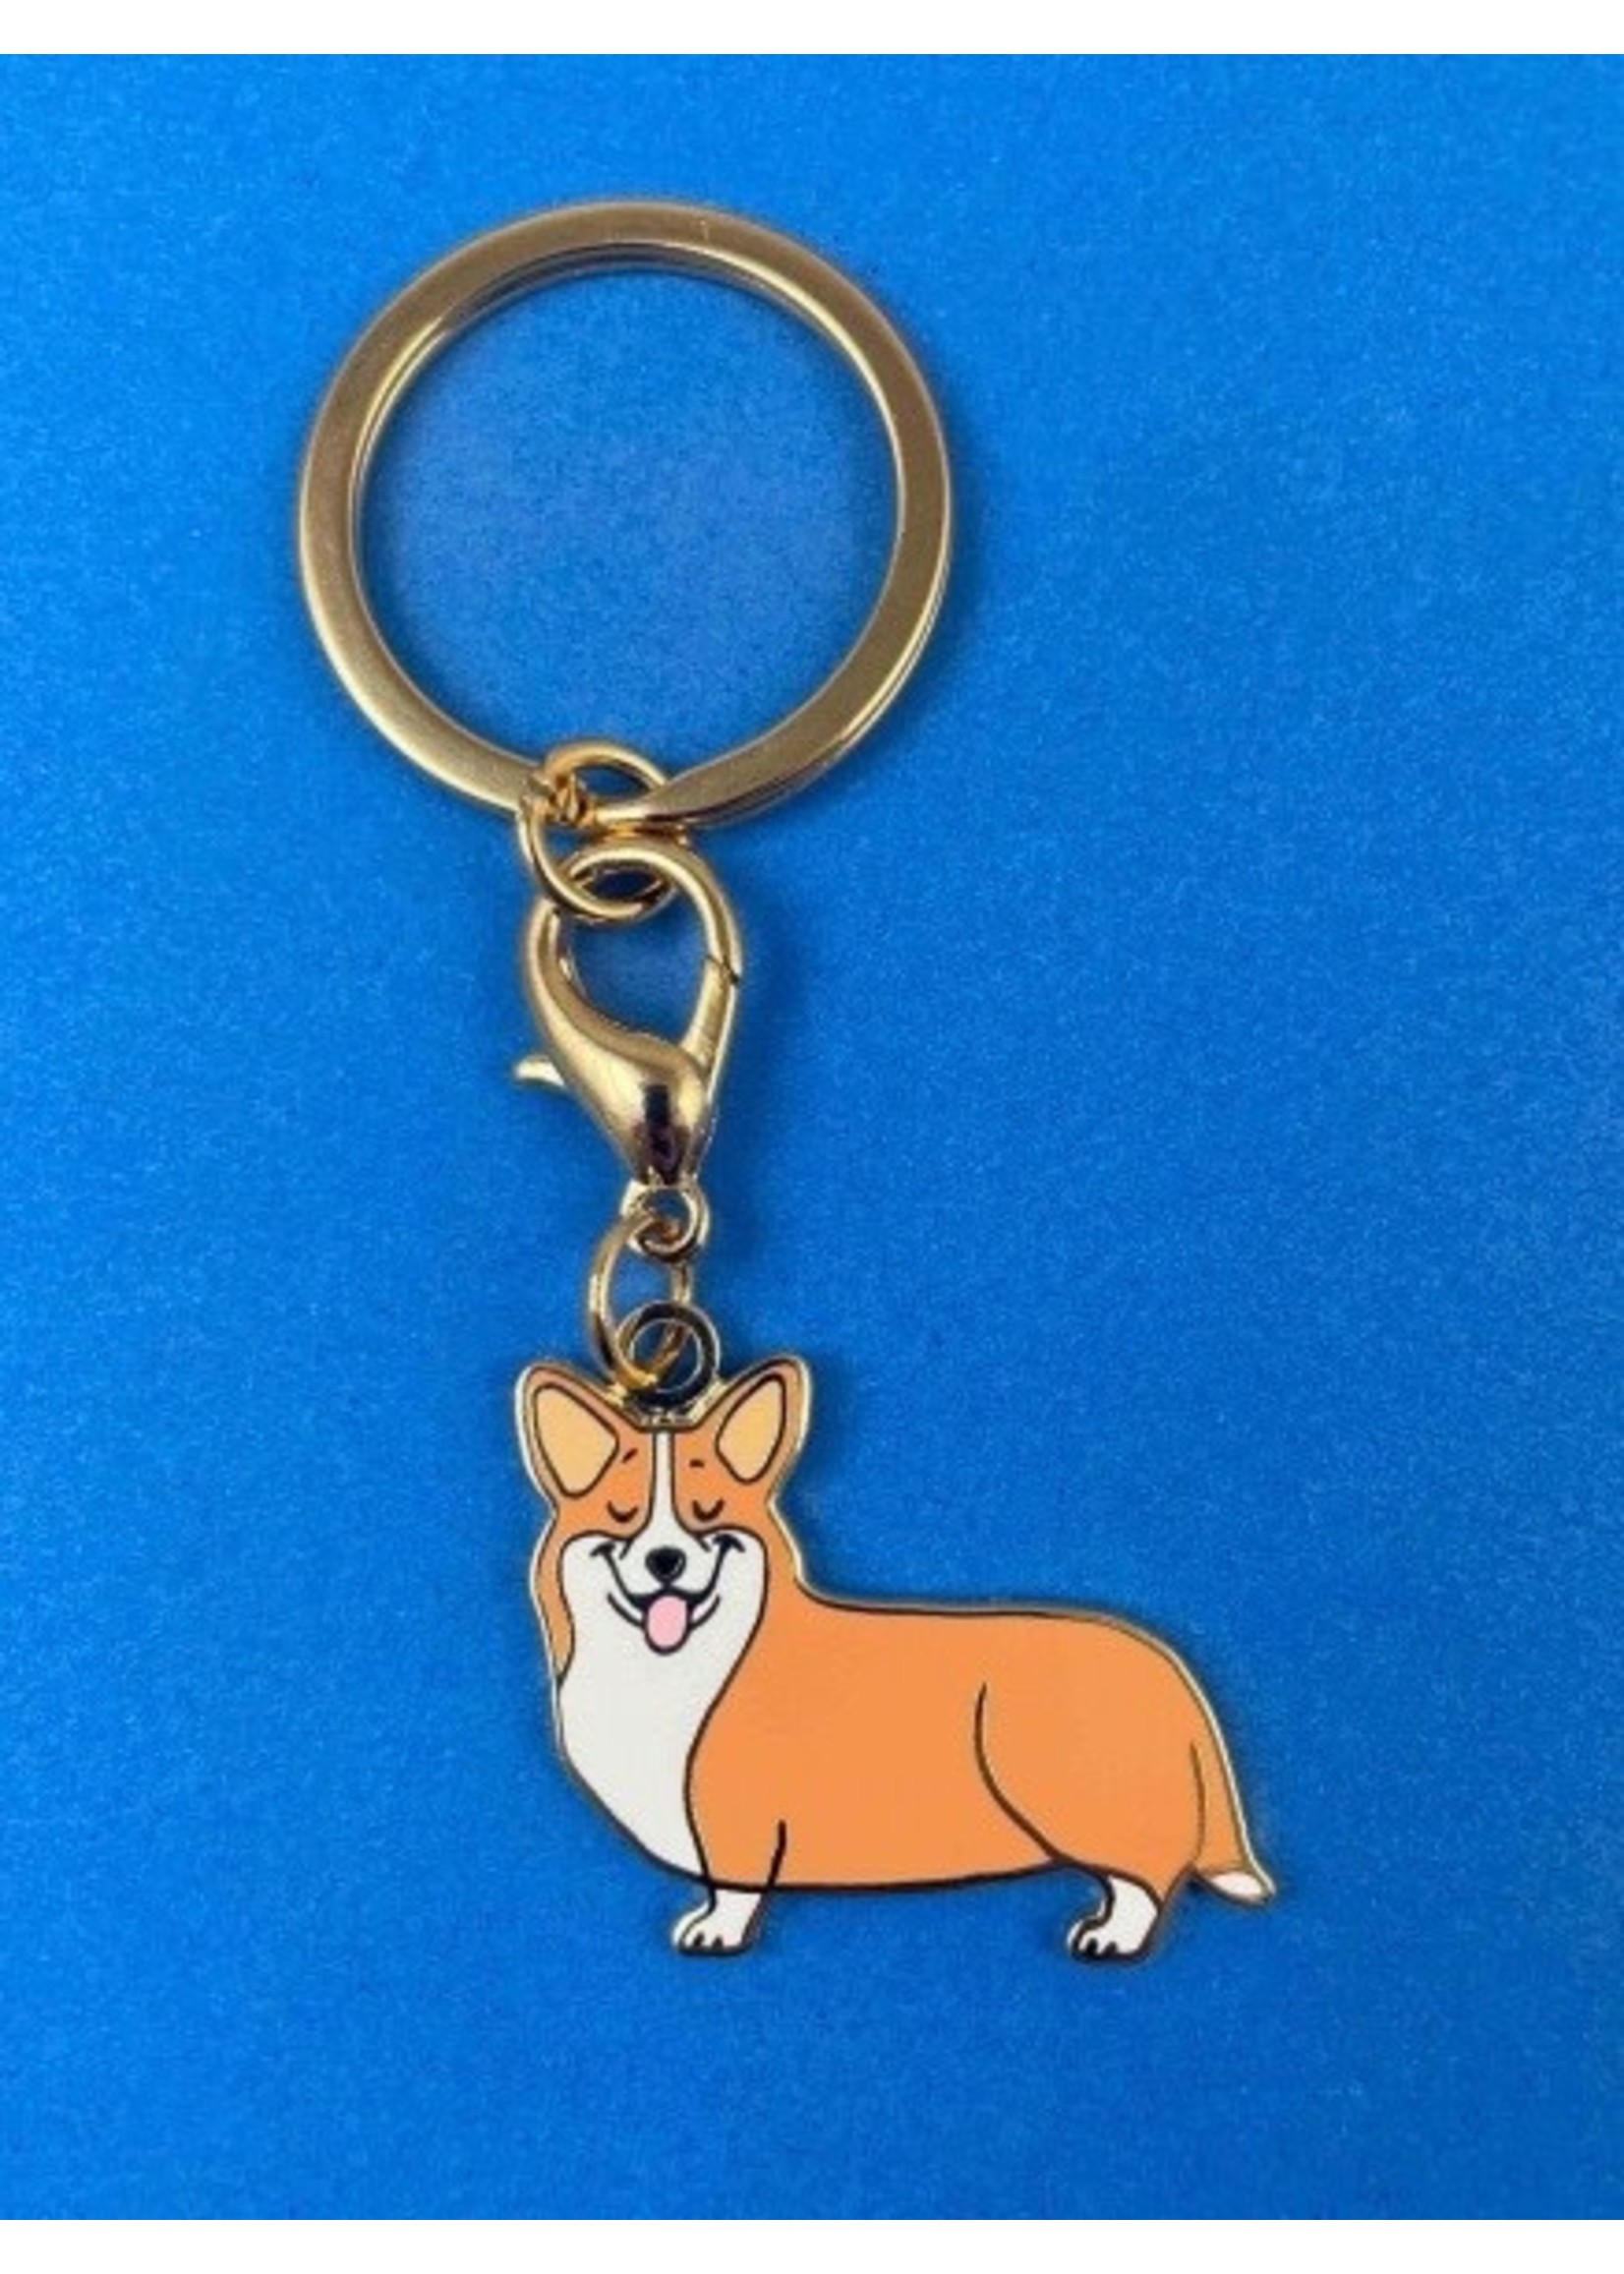 Coucou Suzette Dog Key Chain